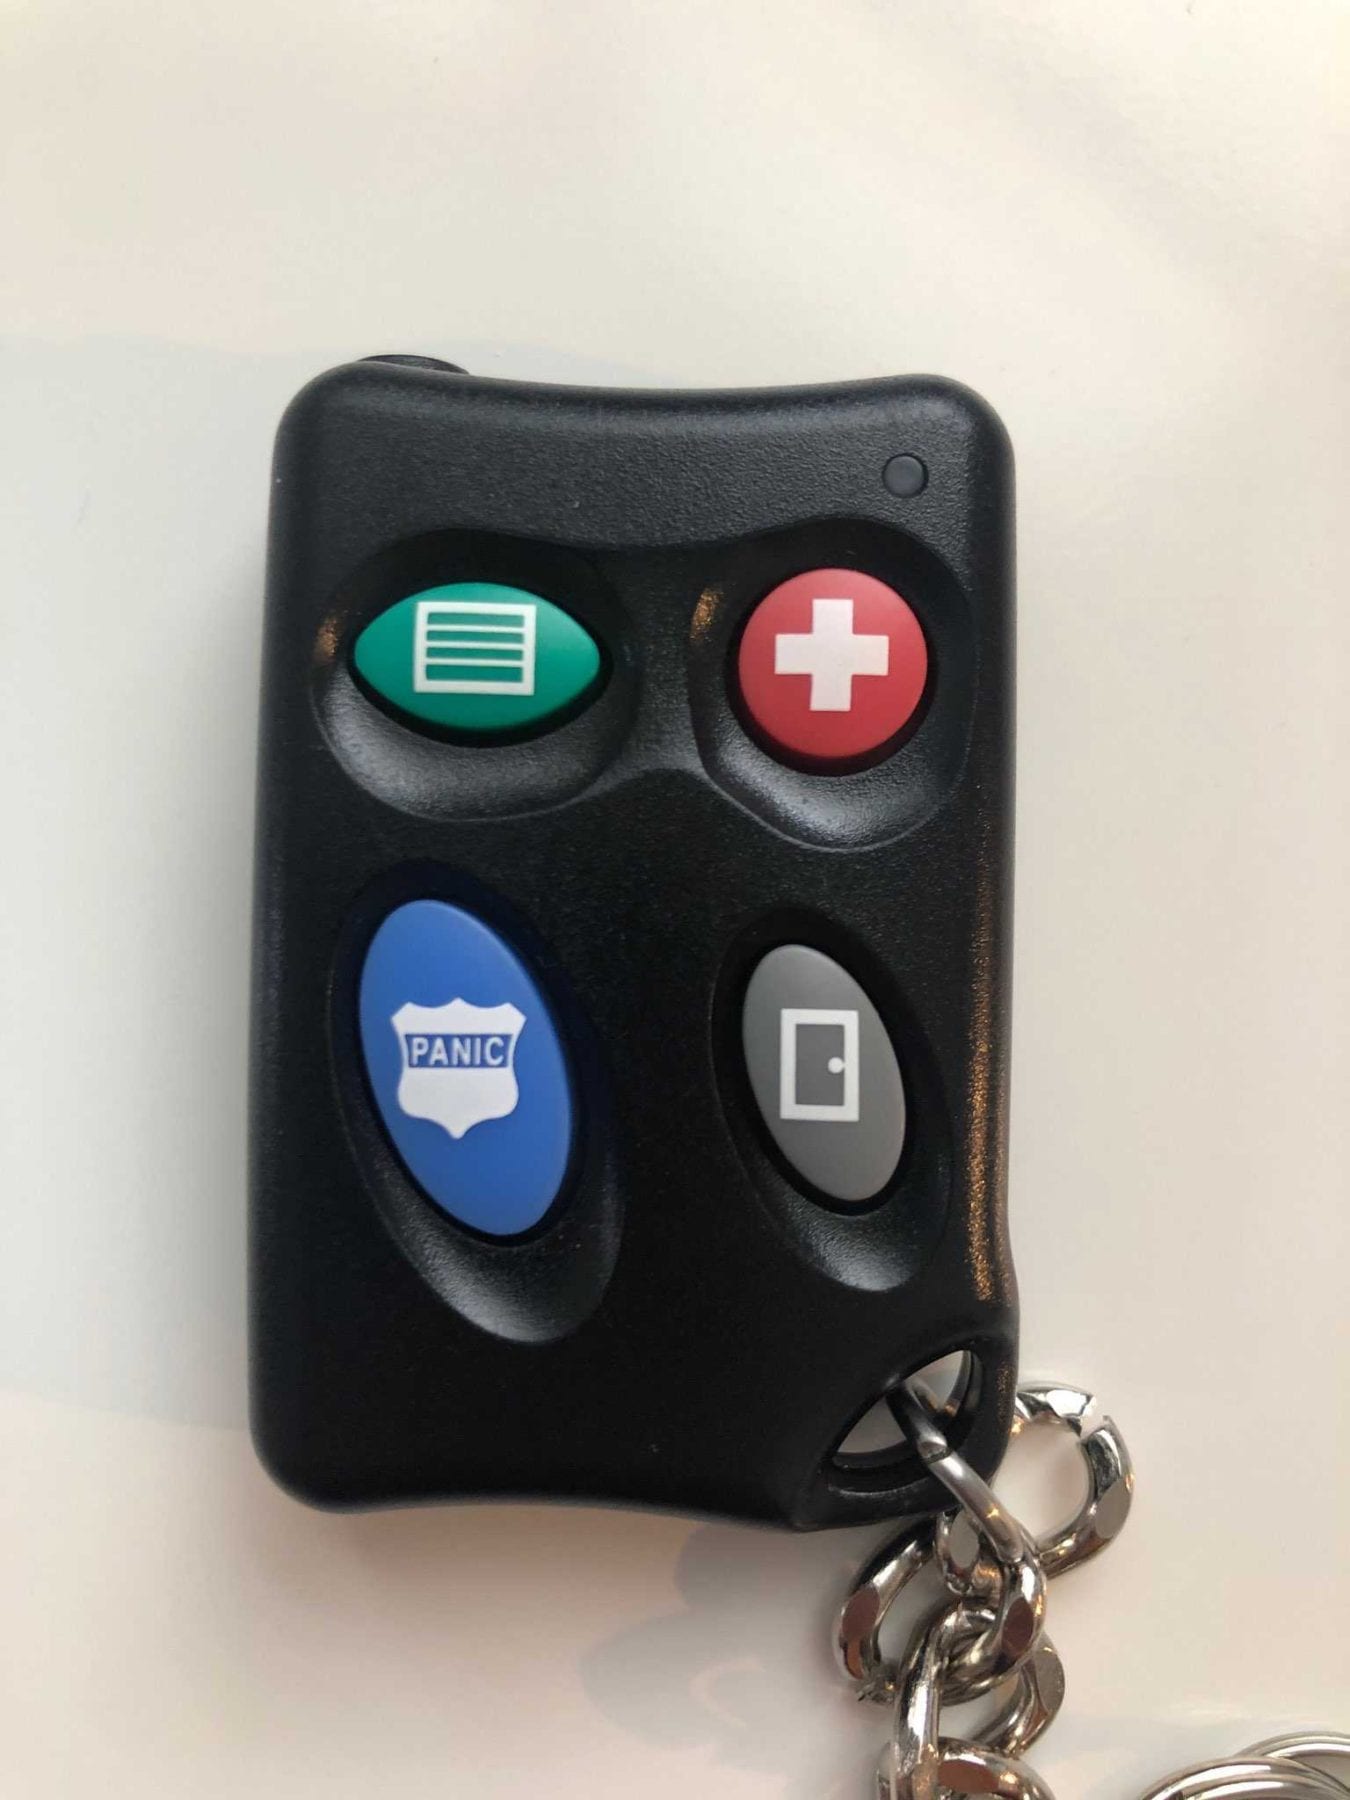 keyscan remote duplication